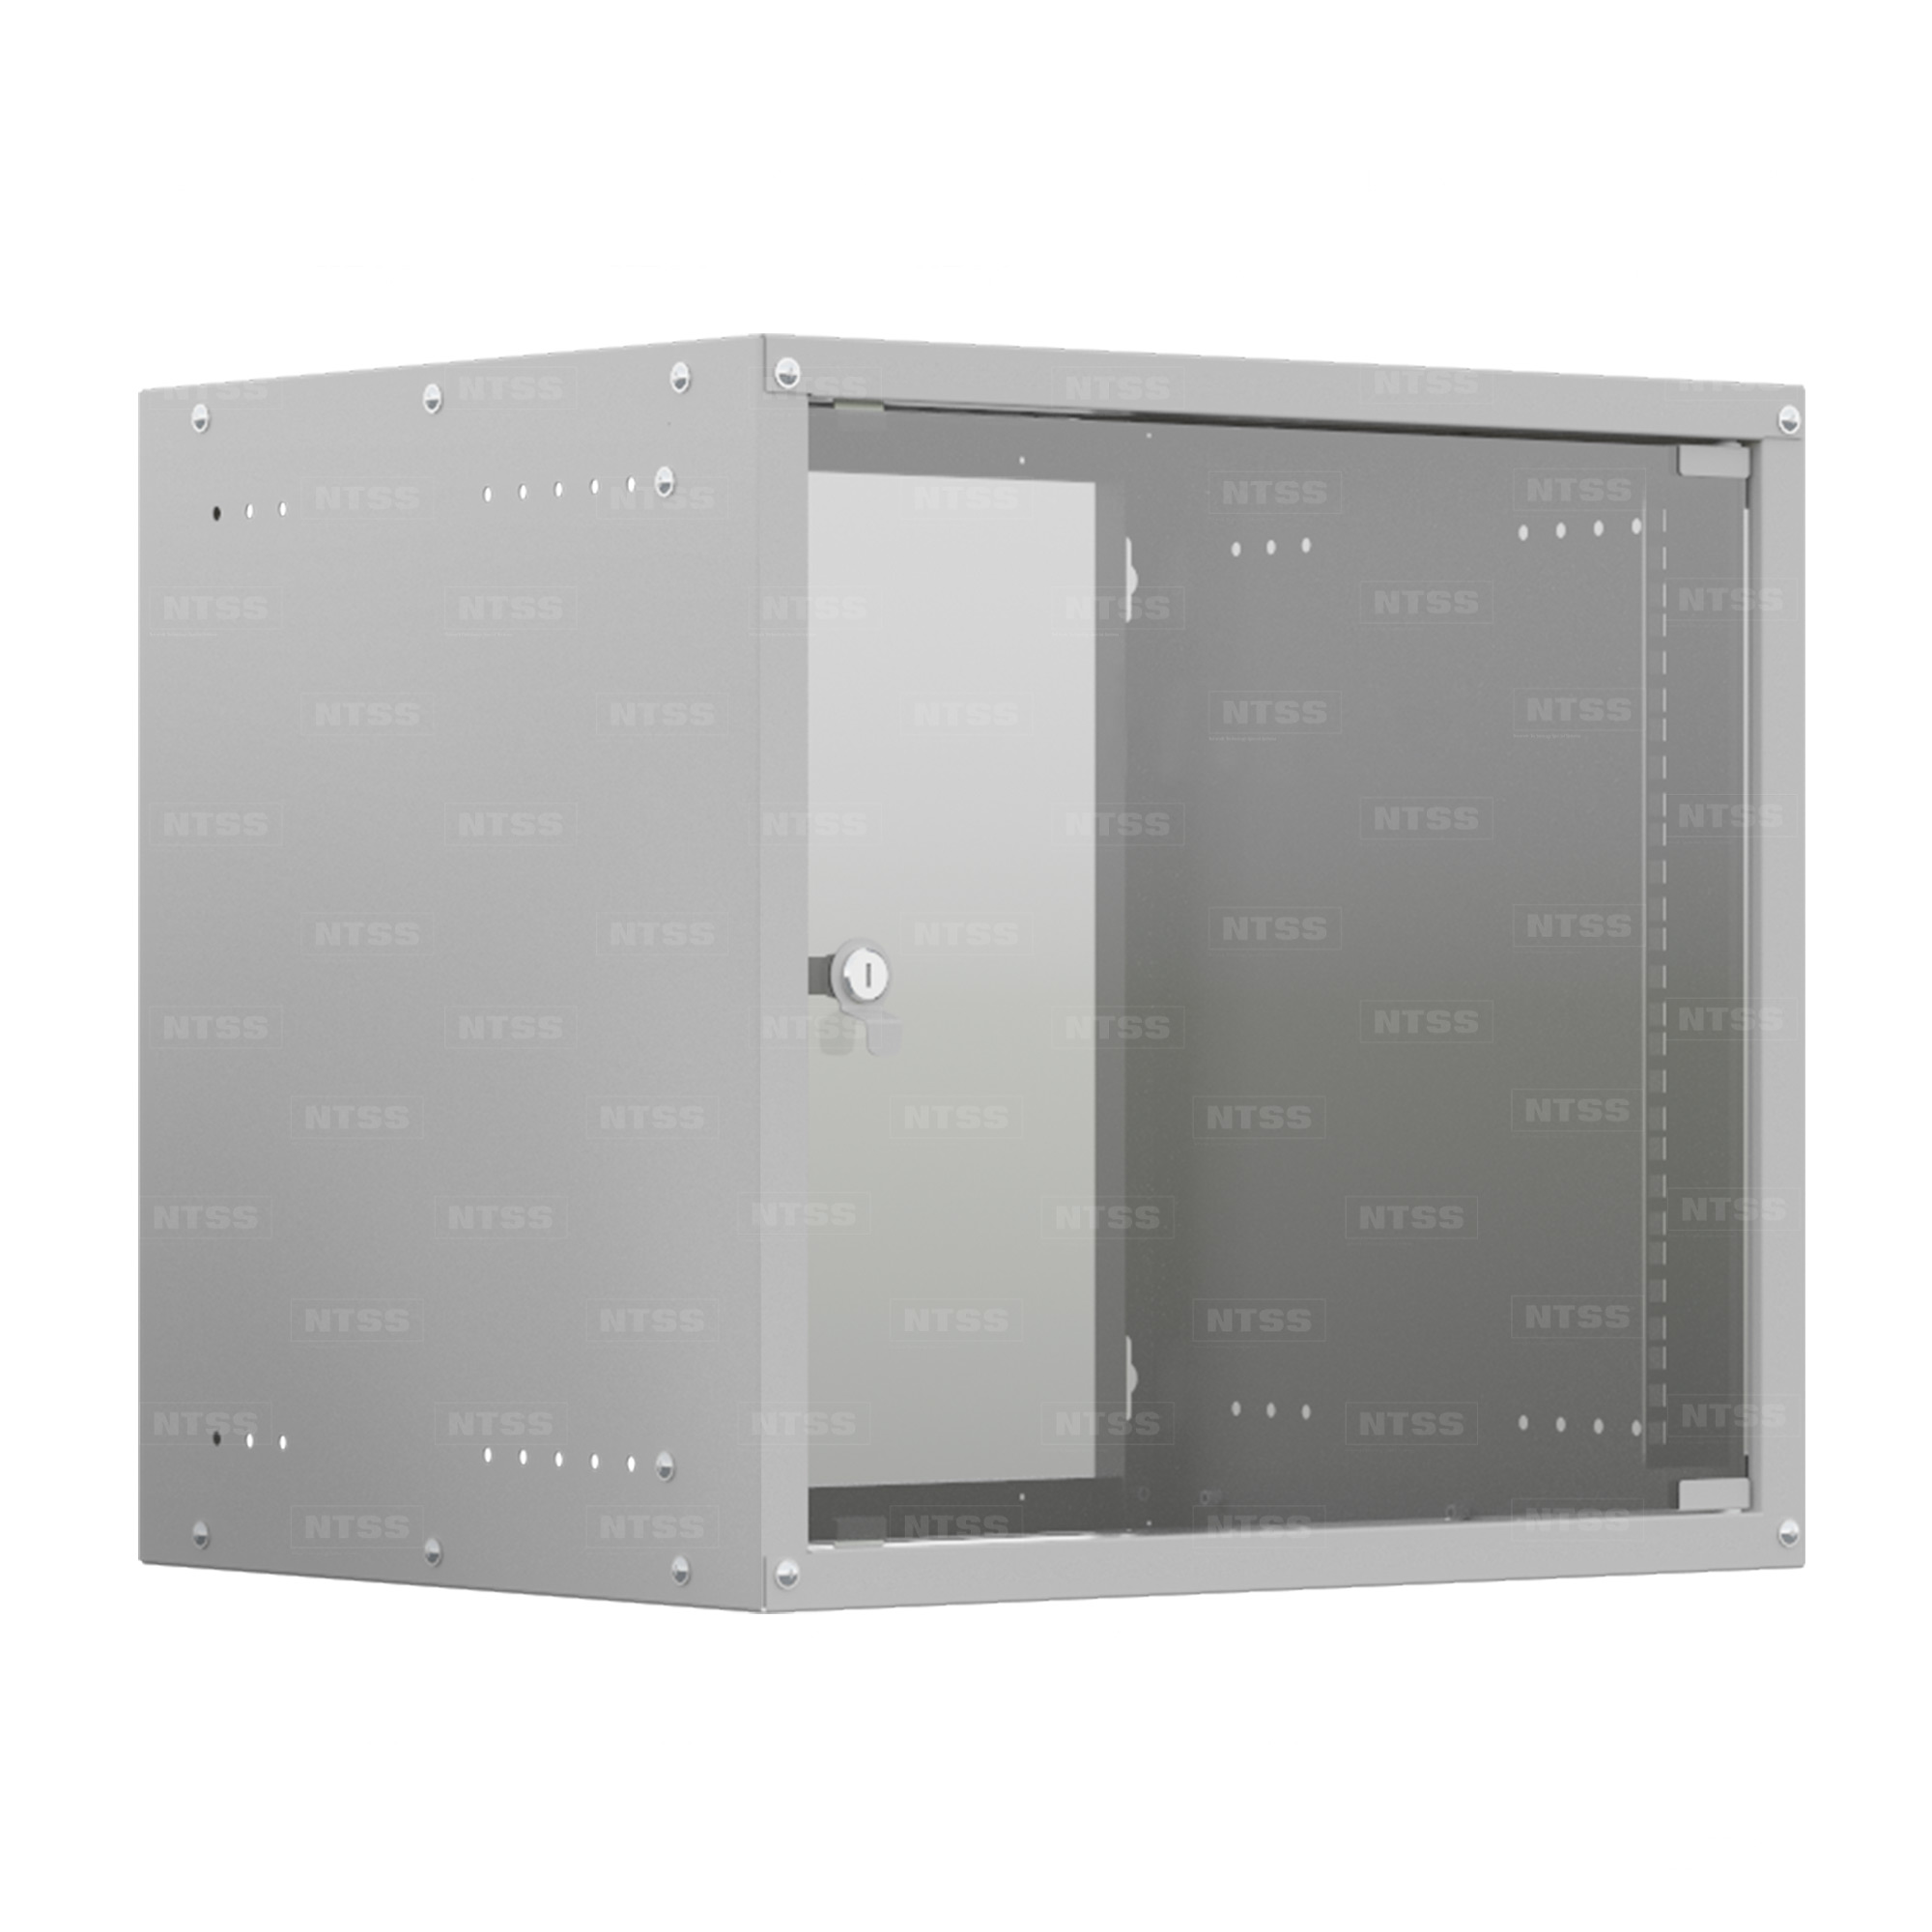 Шкаф телекоммуникационный настенный 12U 550x600 мм, стекло/металл, серый, разборный, NTSS LIME NTSS-WL12U5560GS (NTSS-WL12U5560GS)